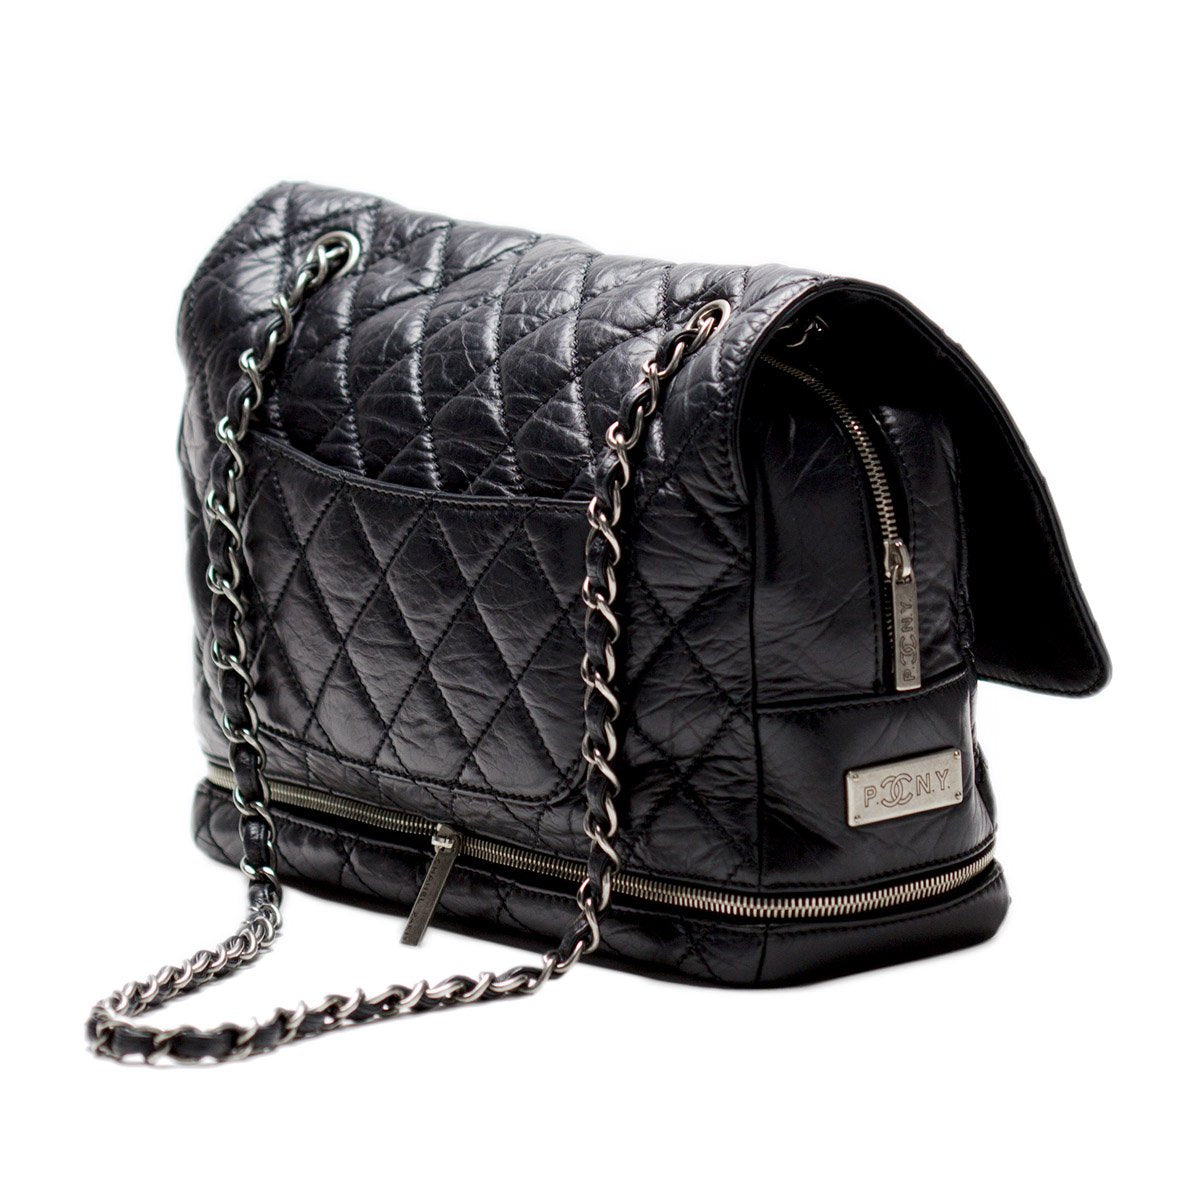 Chanel Maxi Classic Flap Bag in Black | MTYCI